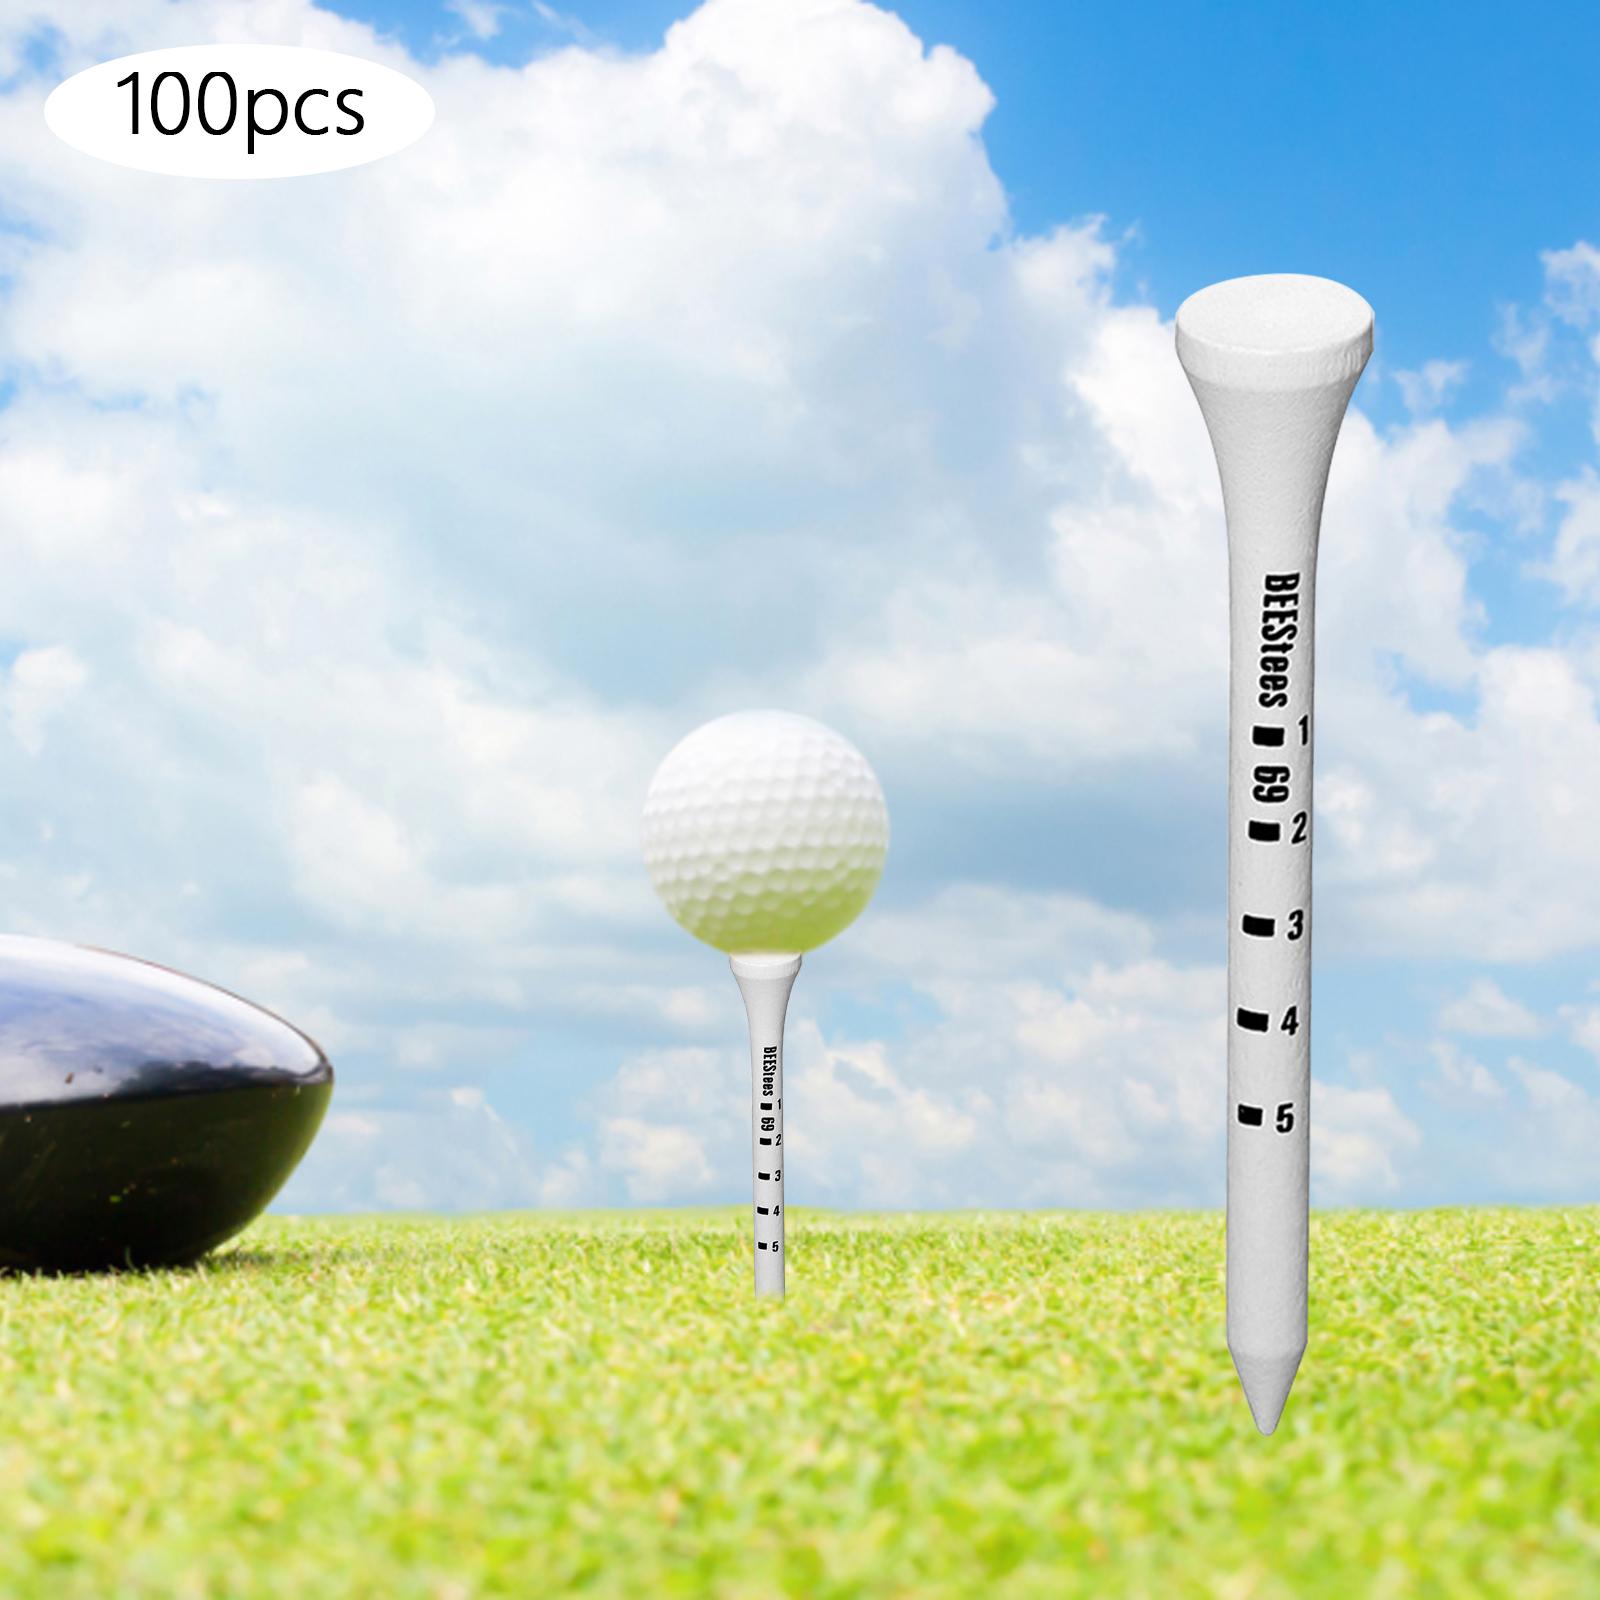 100 Pieces Golf Tee Improve Golf Distance Precision Durable Golf Ball Holder 69mm